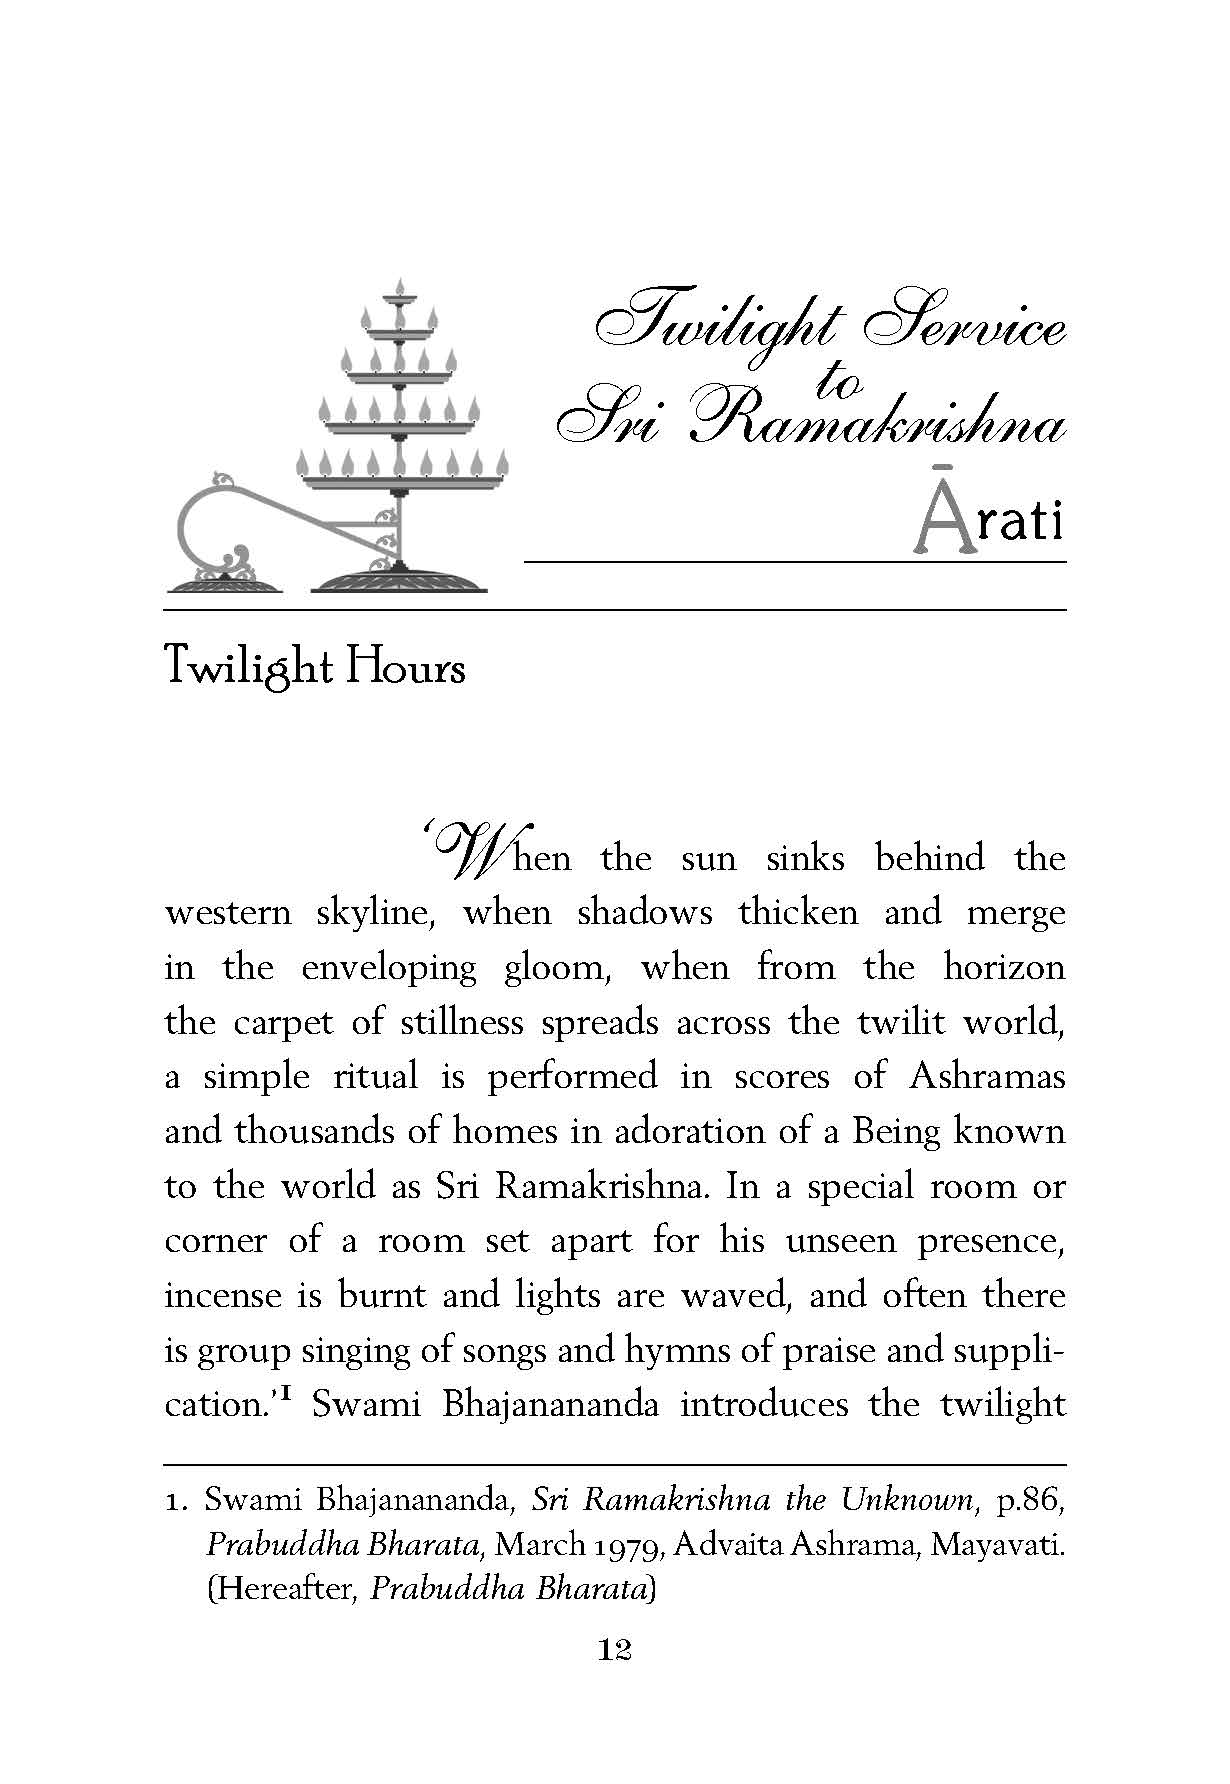 Twilight Service to Sri Ramakrishna